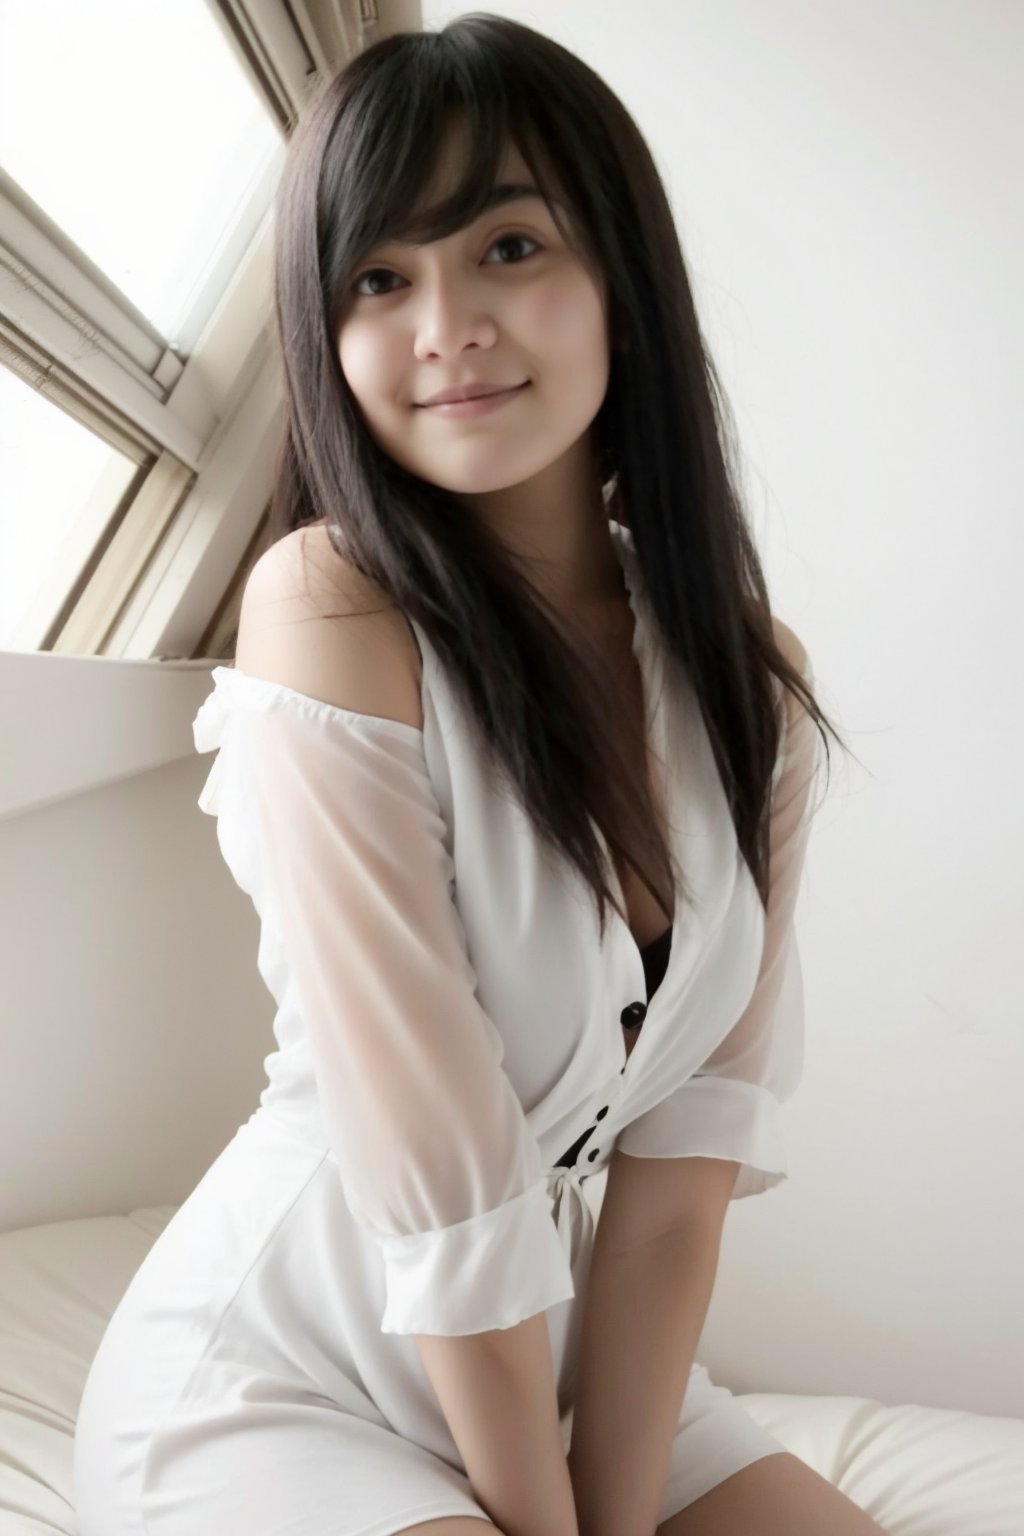 beautiful 25 years old girl, black hair, small breasts, wearing white minidress